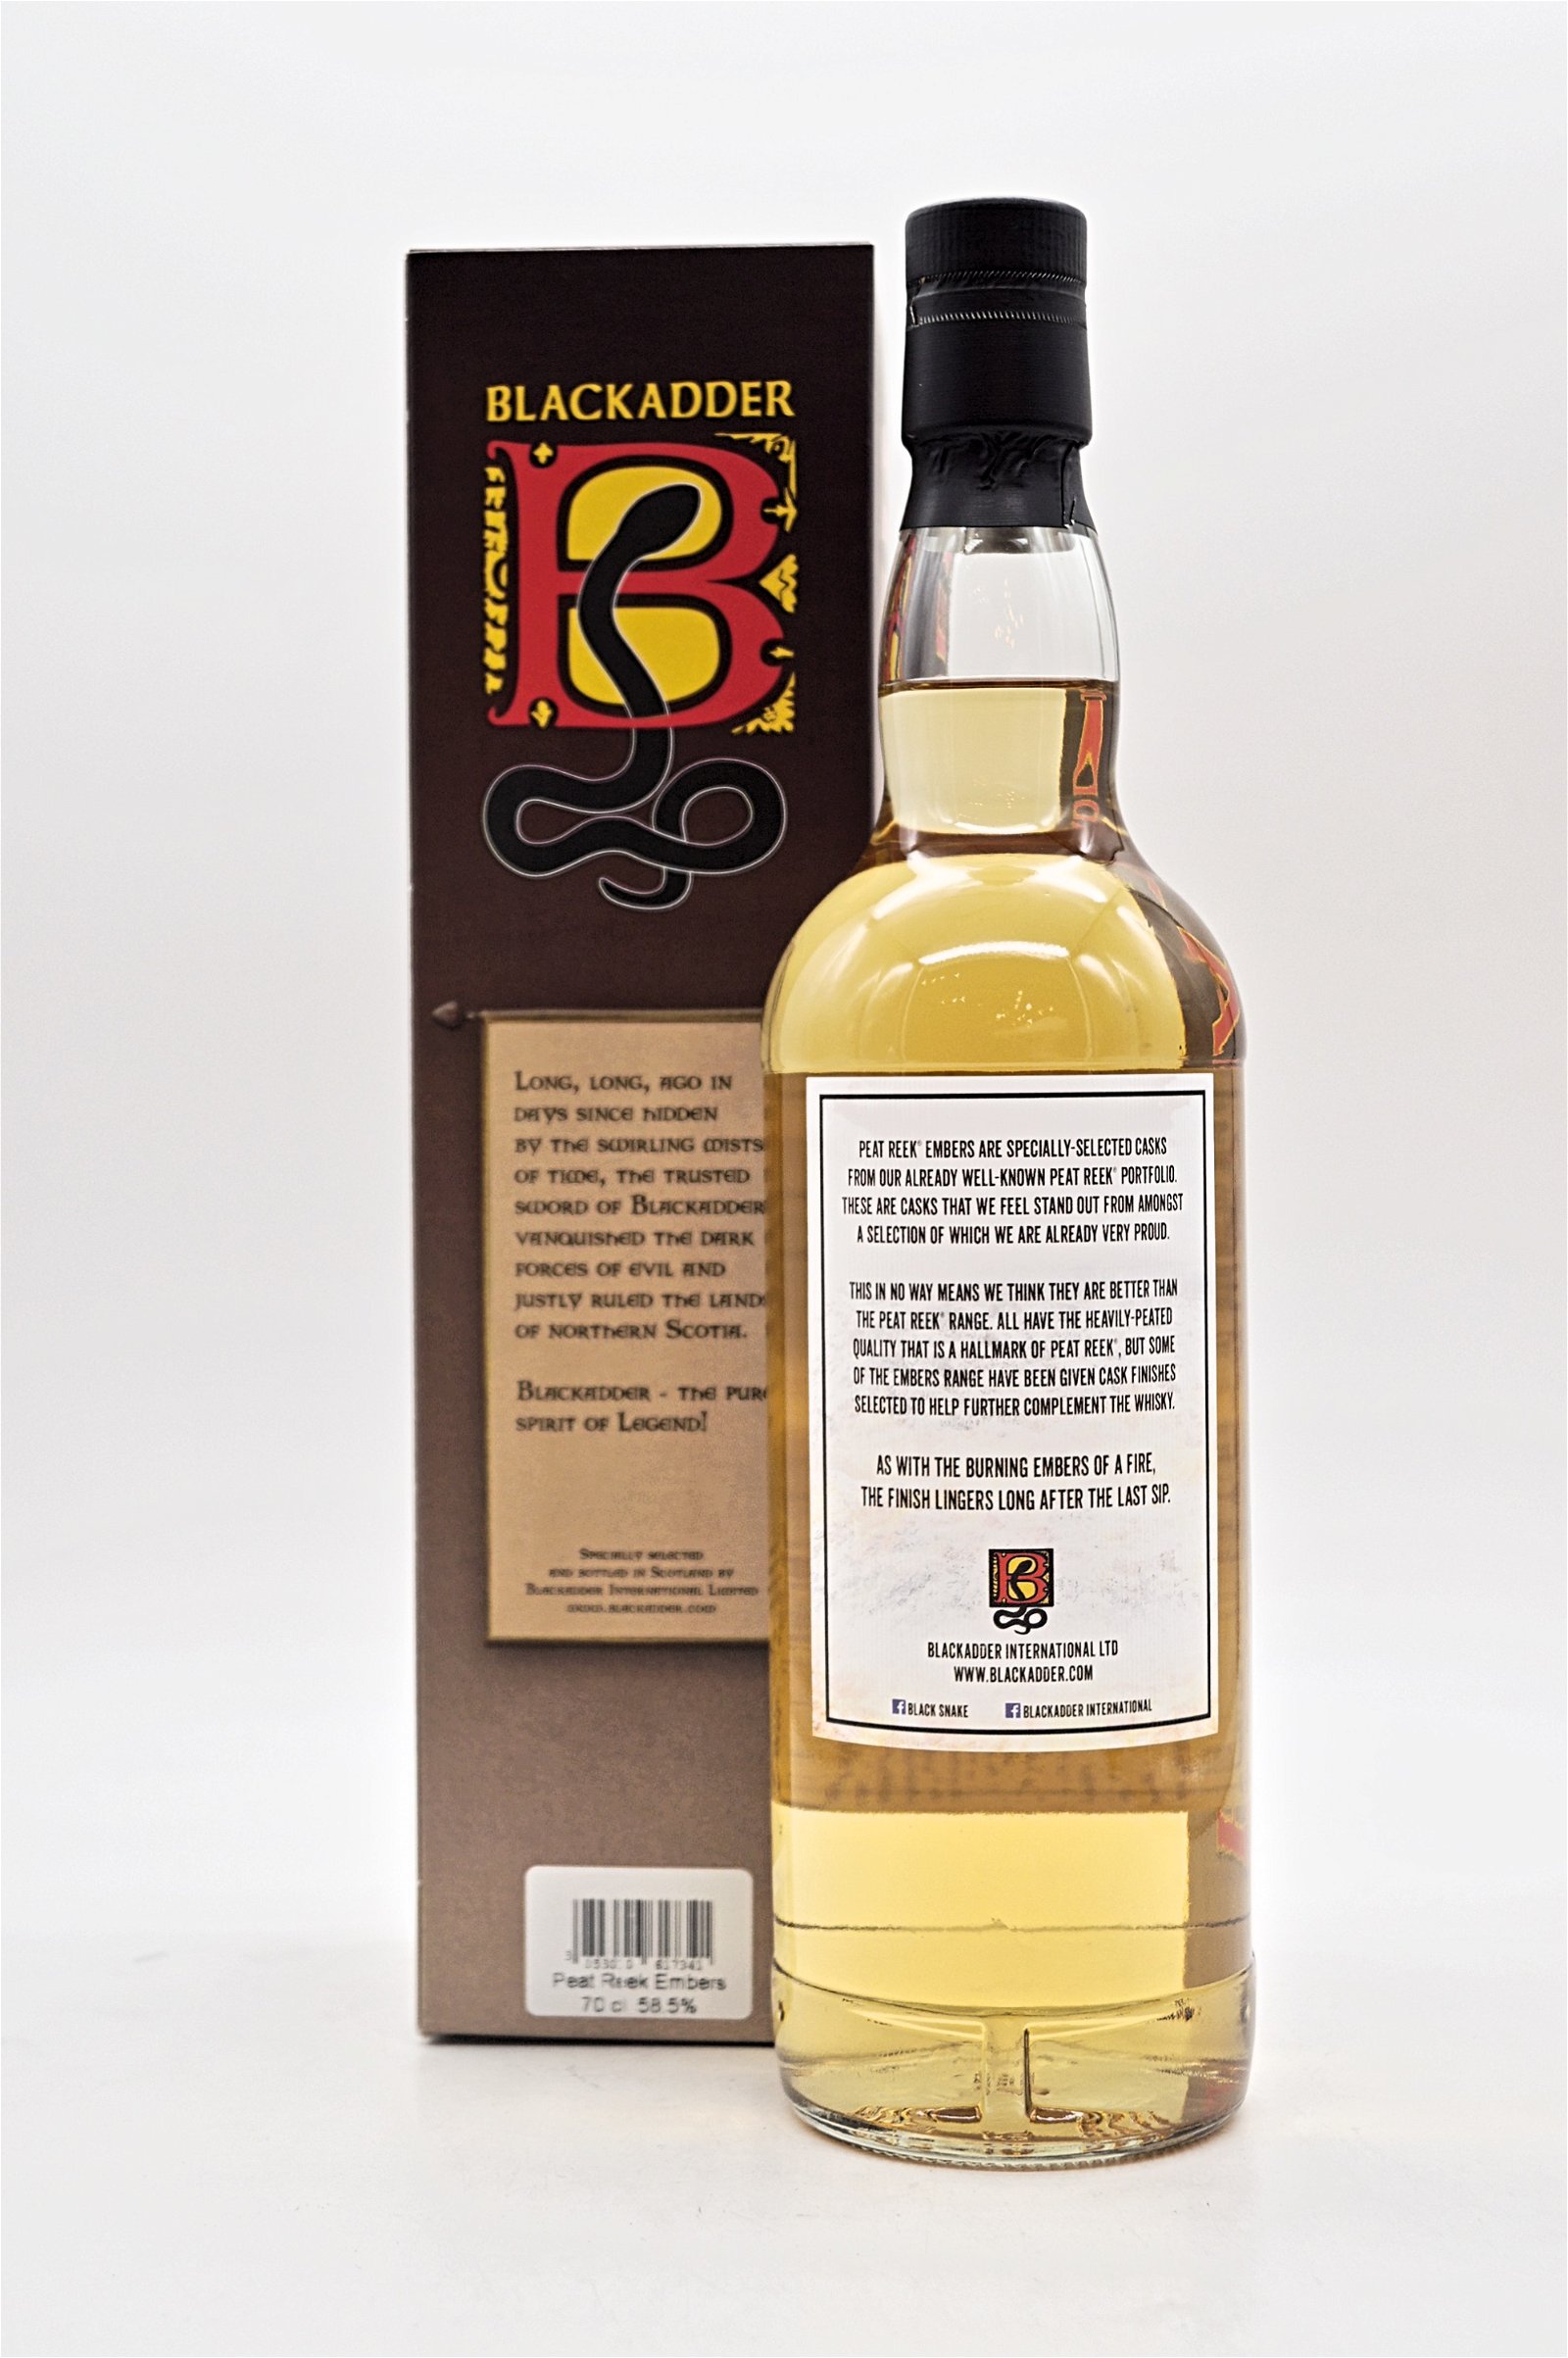 Blackadder Peat Reek Embers EMB6 Single Malt Scotch Whisky